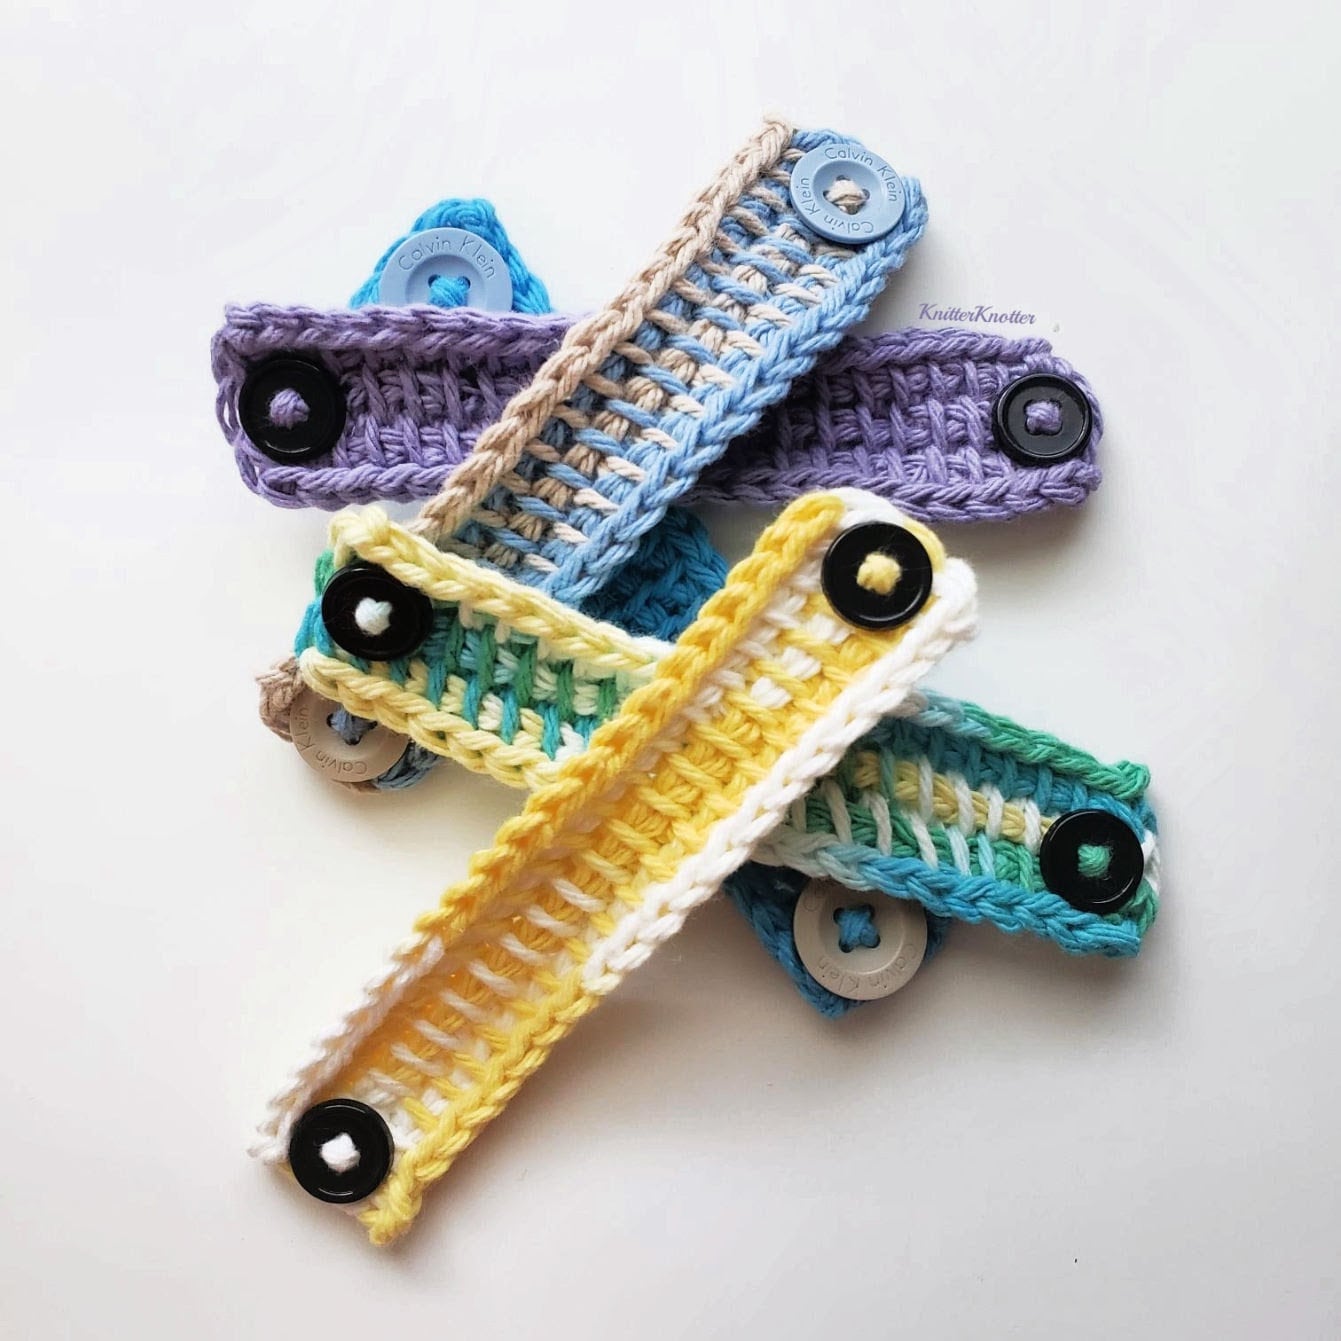 6 Crochet Ear Saver Patterns (Free)